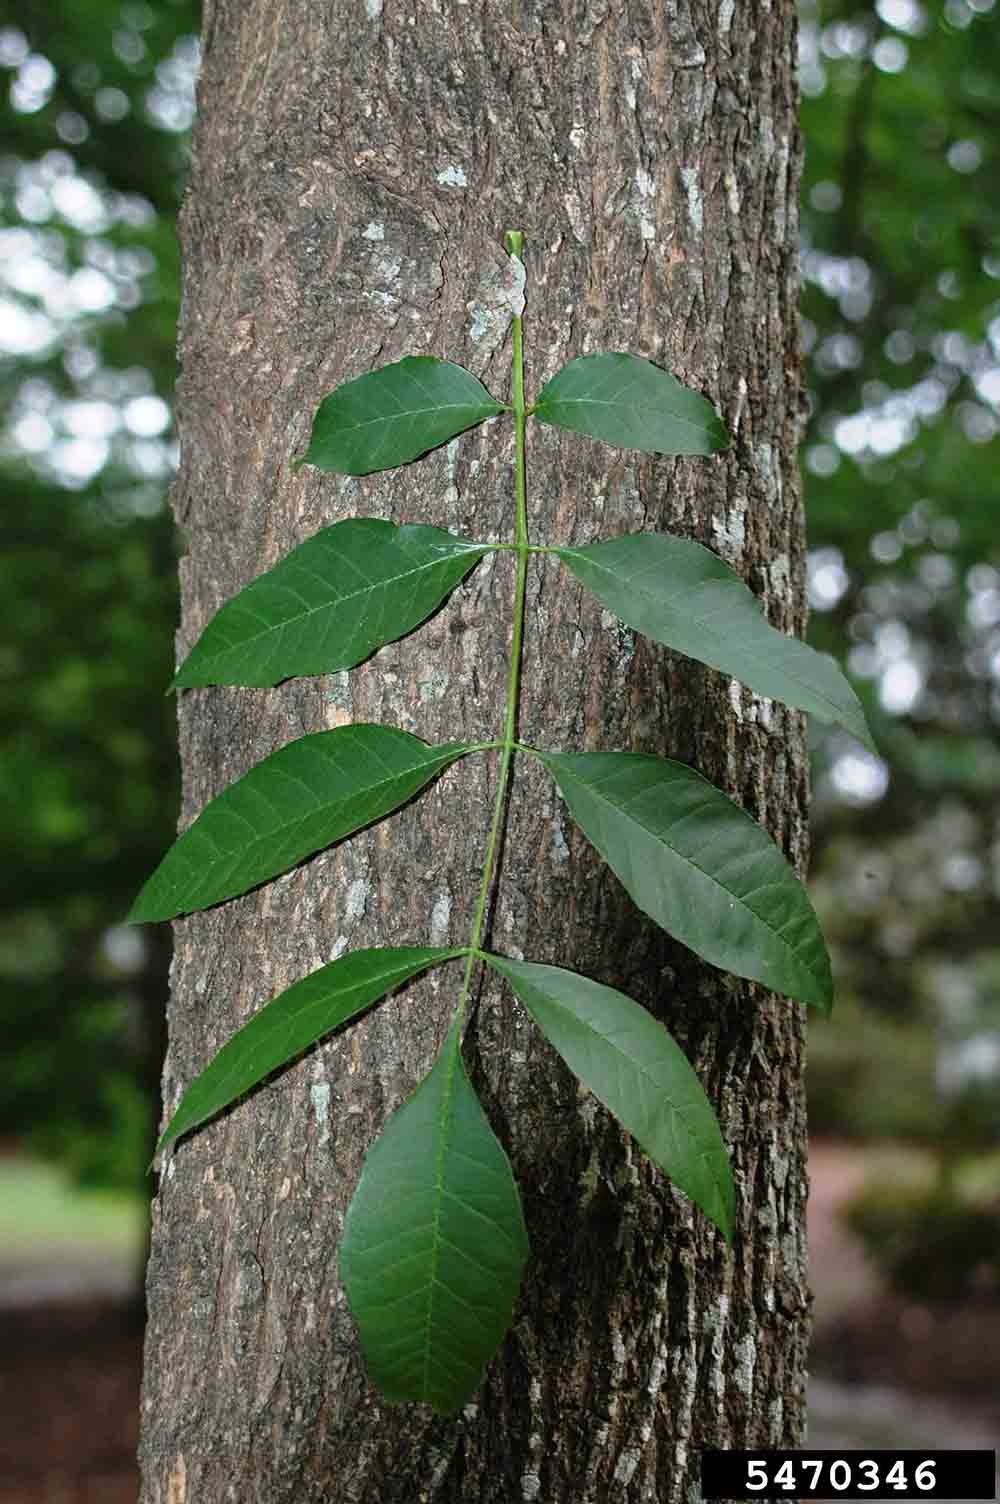 Green ash leaf, pinnately compound, on bark of tree